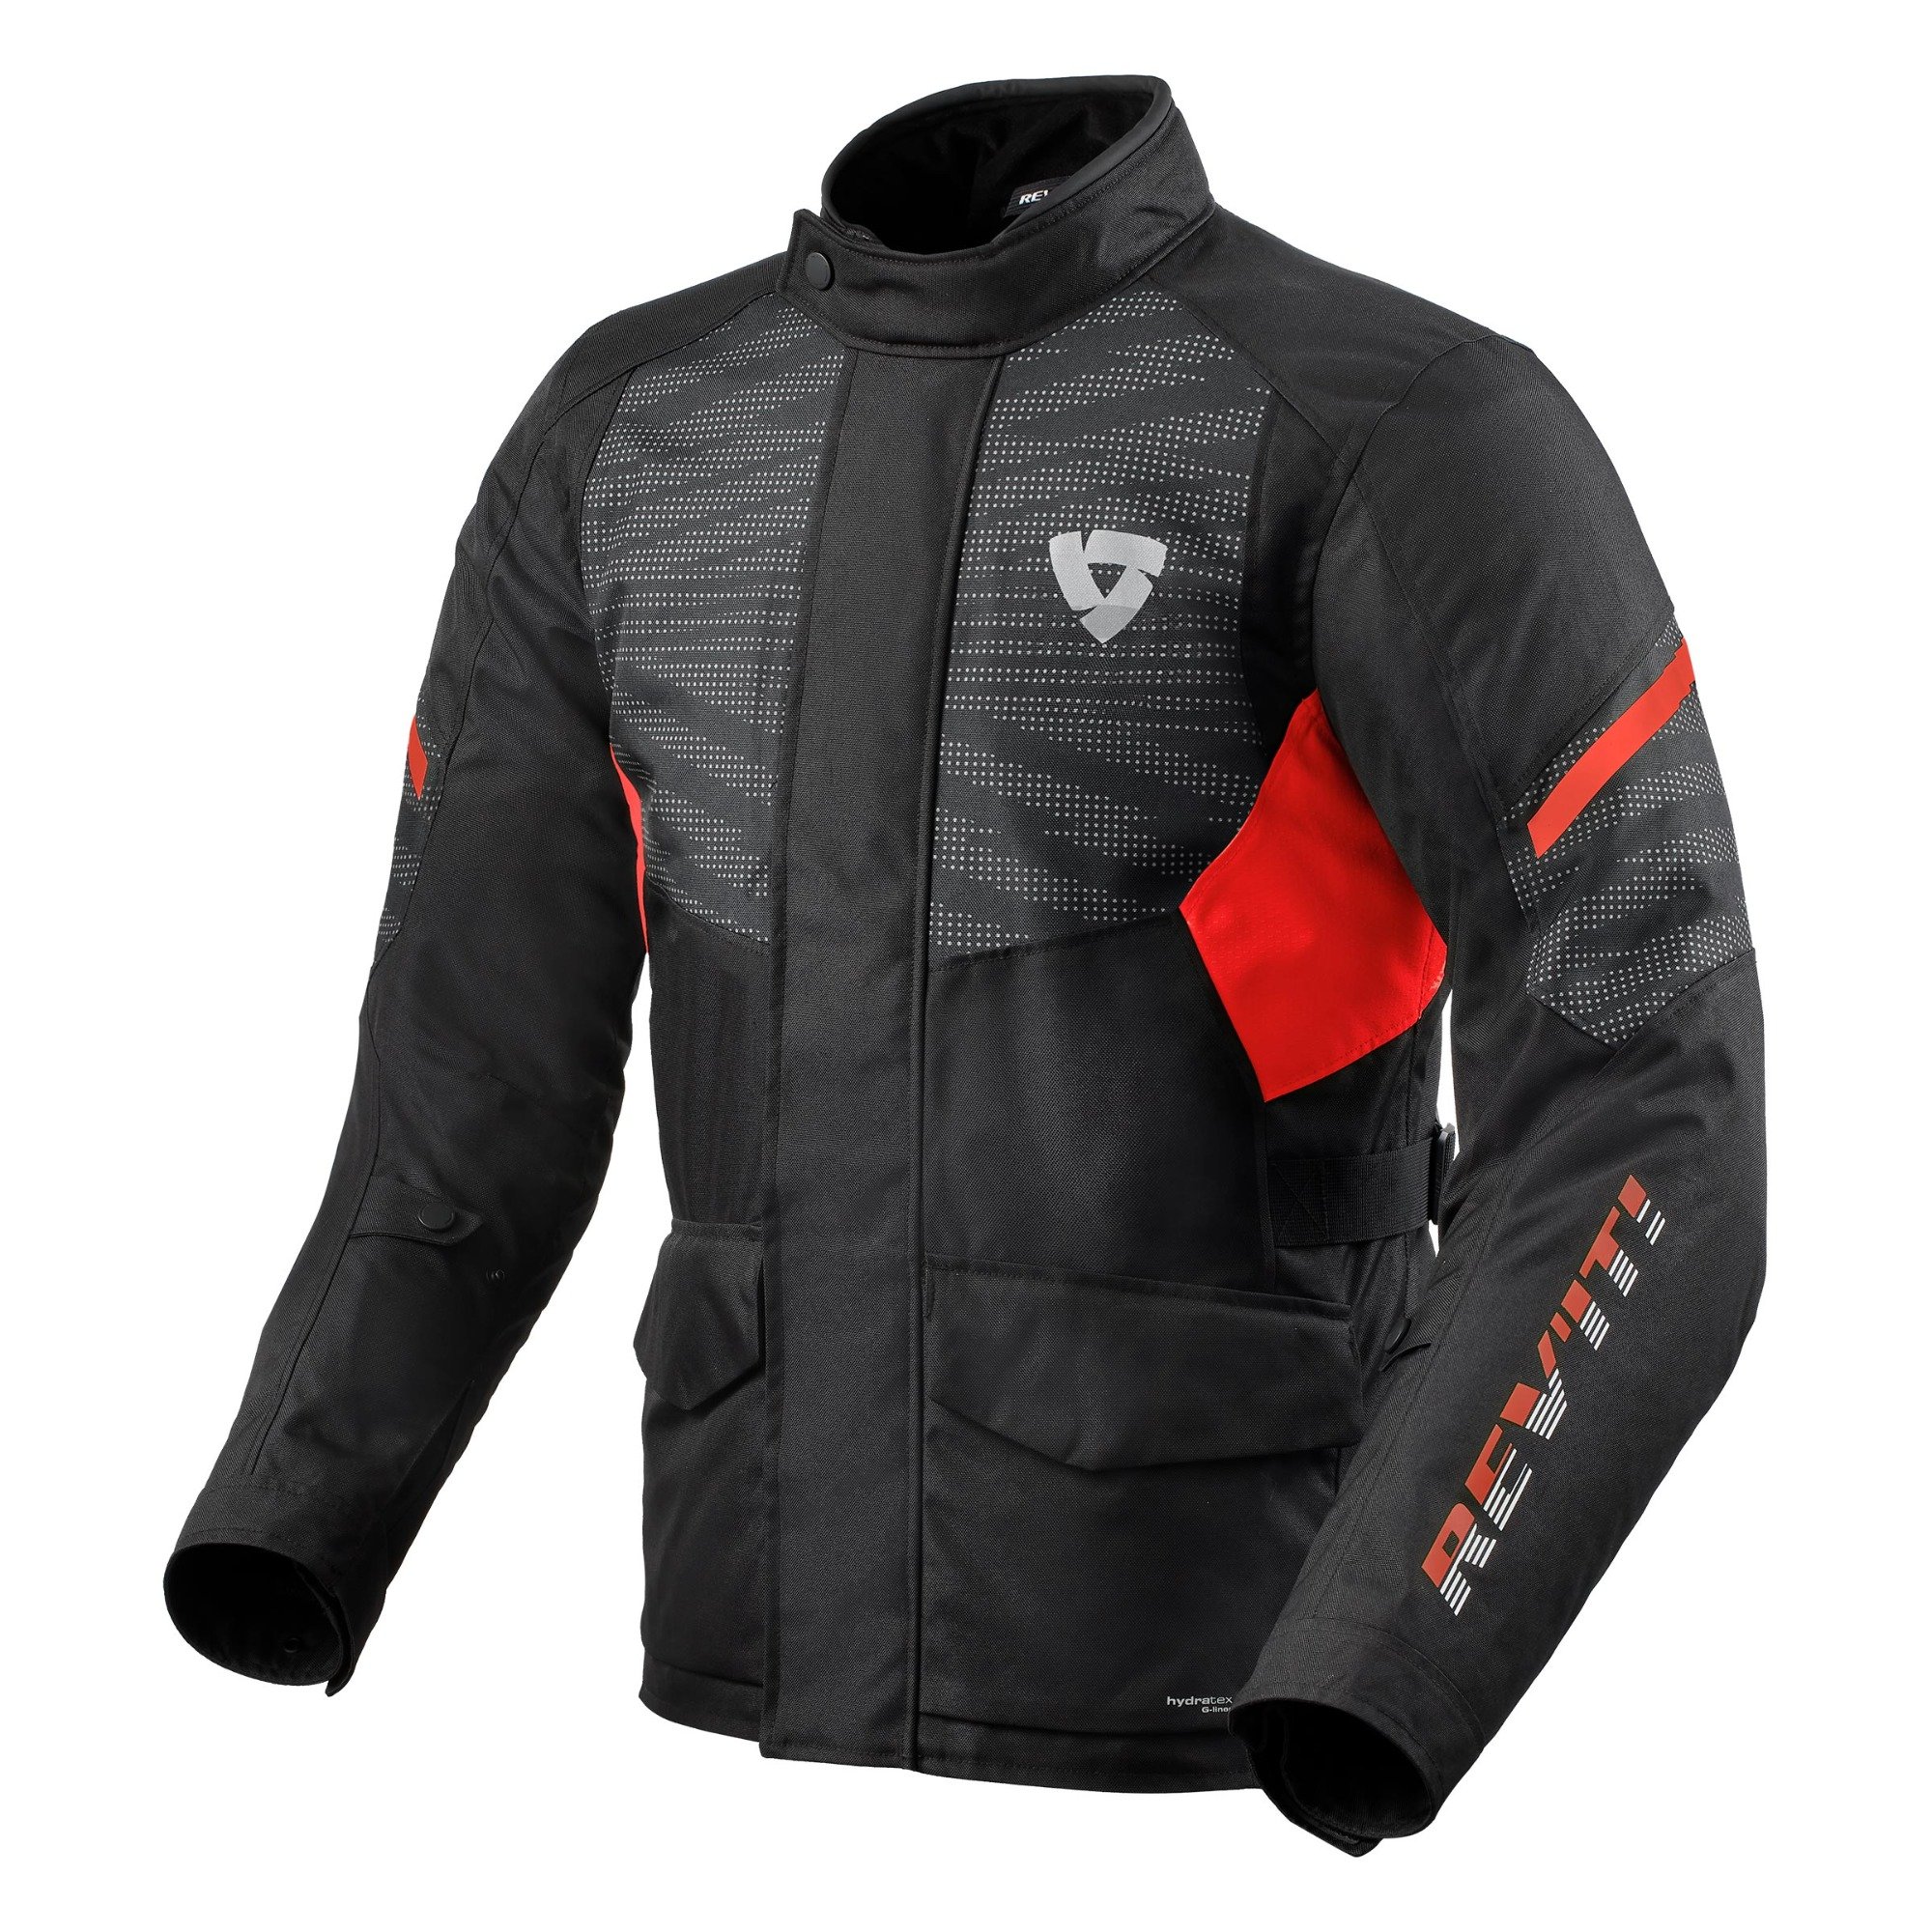 Image of REV'IT! Duke H2O Jacket Black Red Talla S